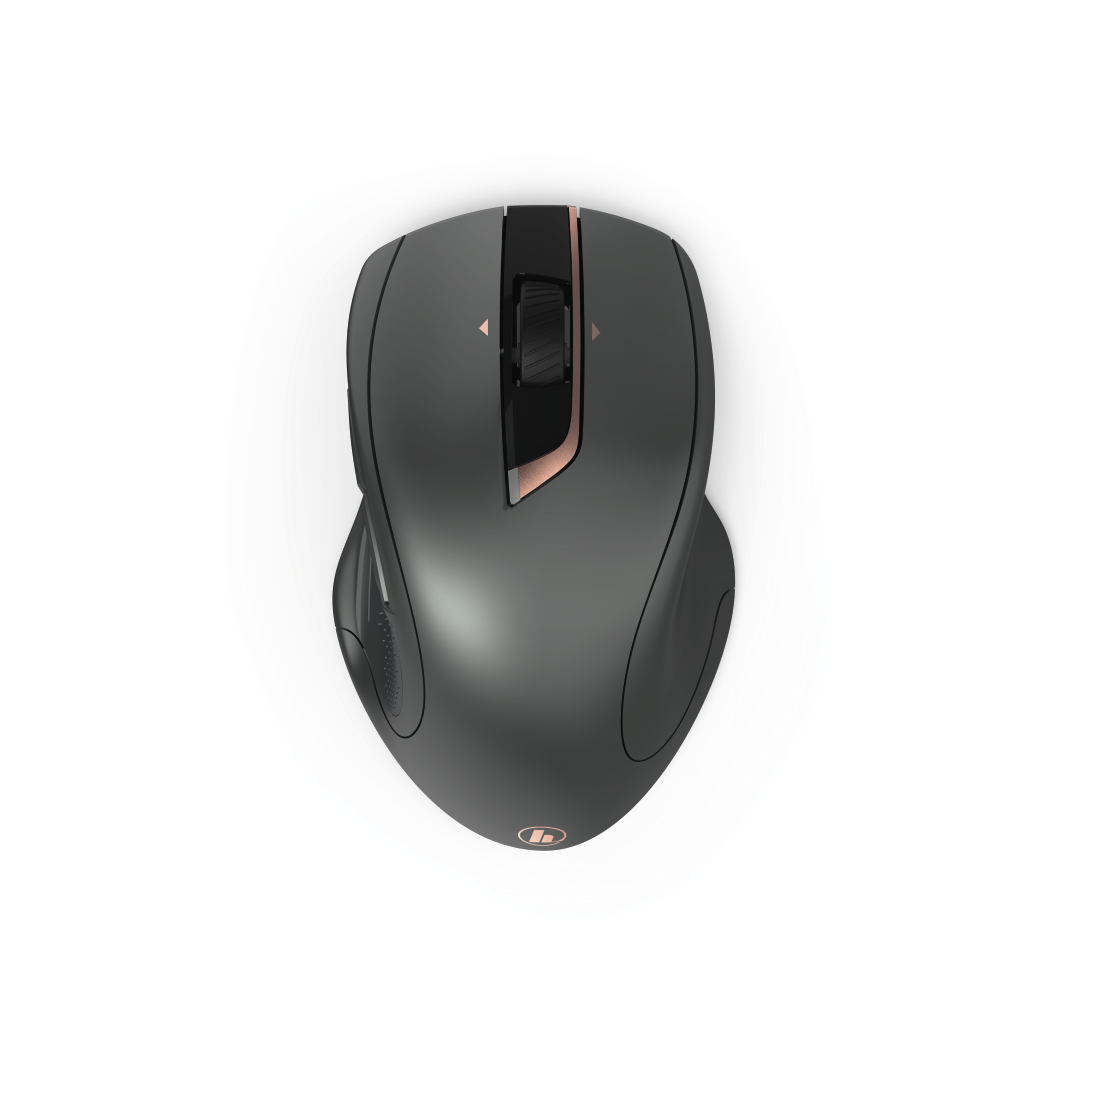 00182669 Hama "MW-800" 7-Button Laser Wireless Mouse, Auto-dpi, black | hama .com